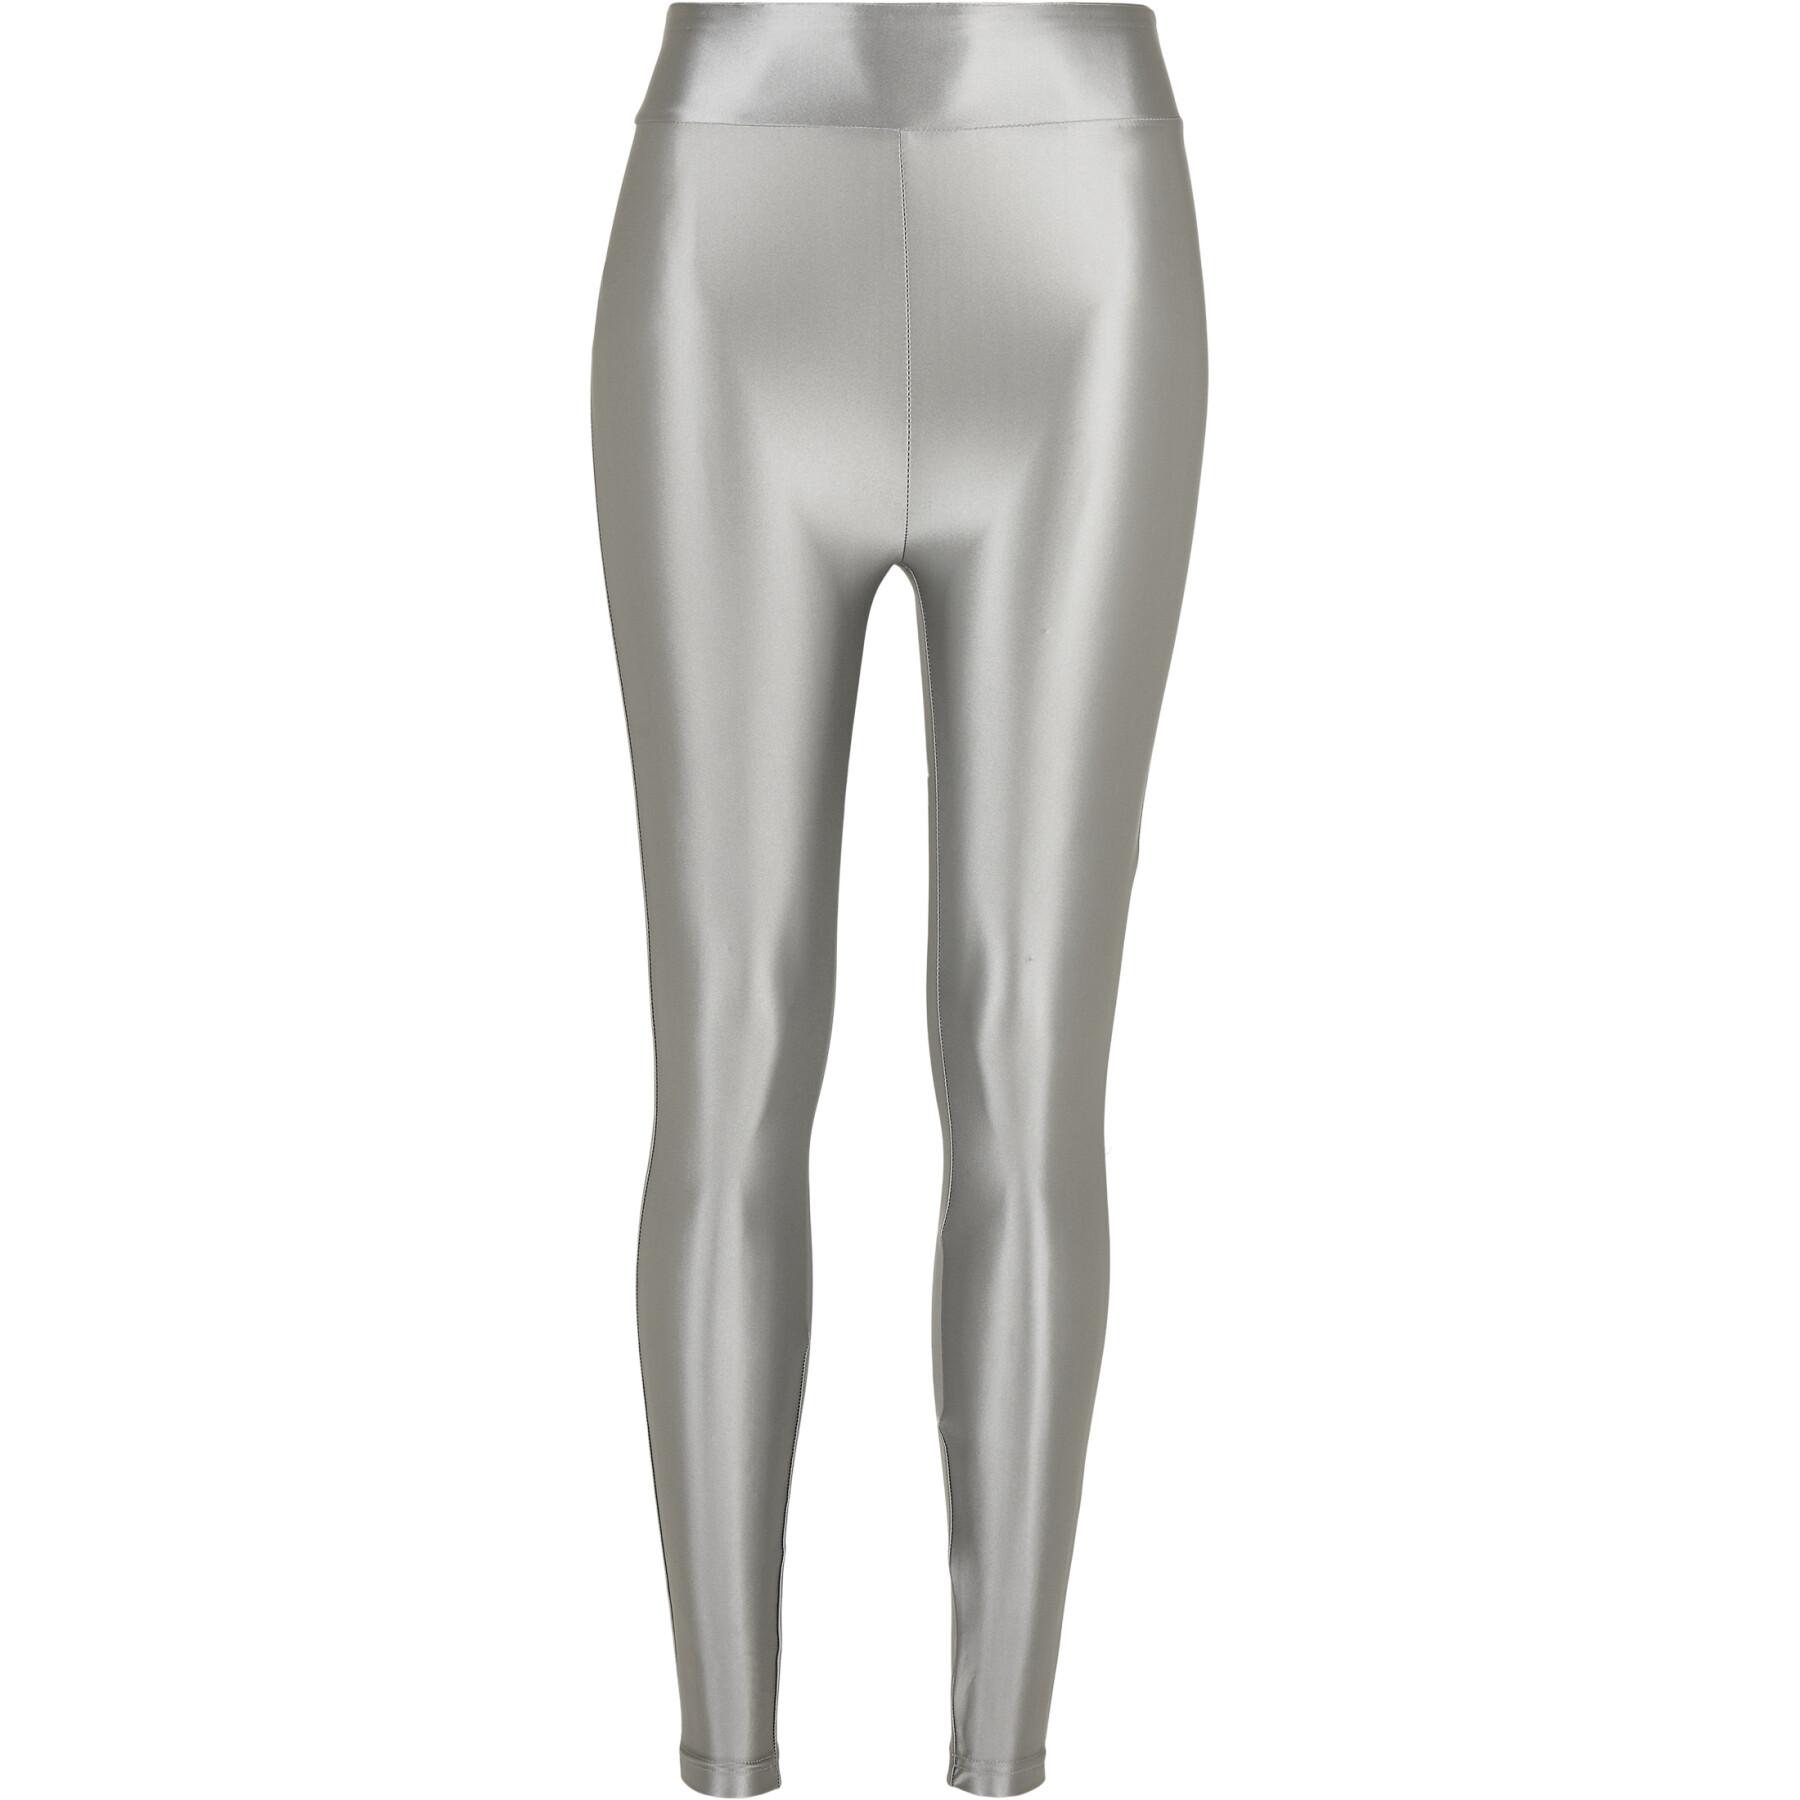 Legging cintura alta mujer tallas grandes Urban Classics Shiny Metalic